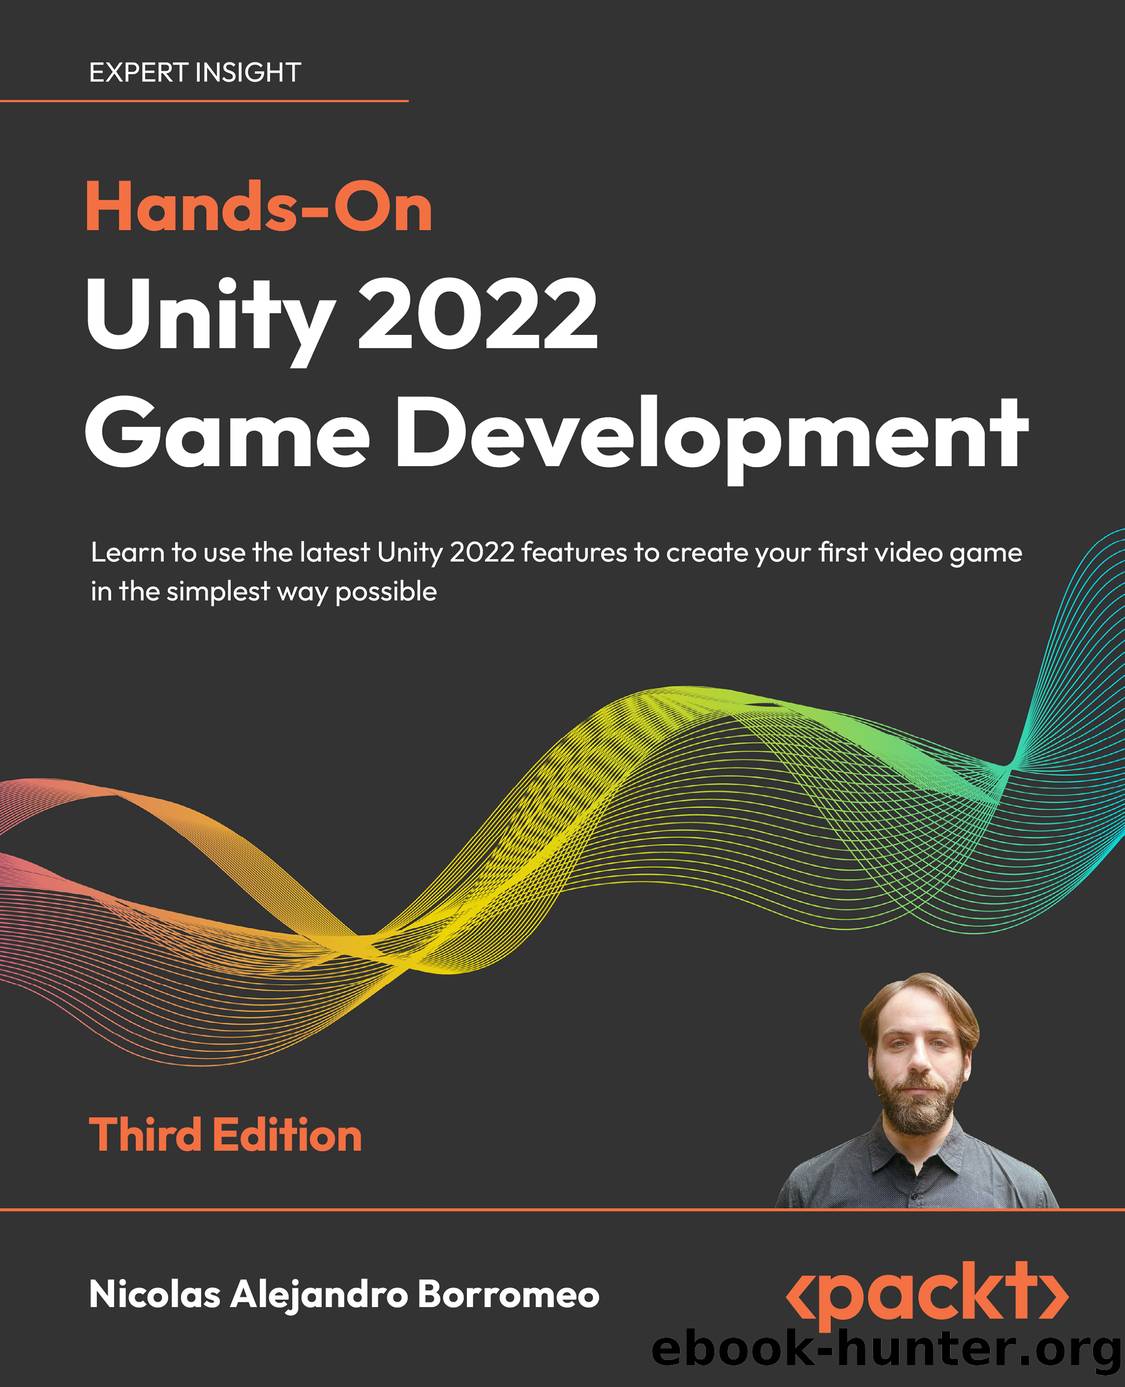 Hands-On Unity 2022 Game Development by Nicolas Alejandro Borromeo